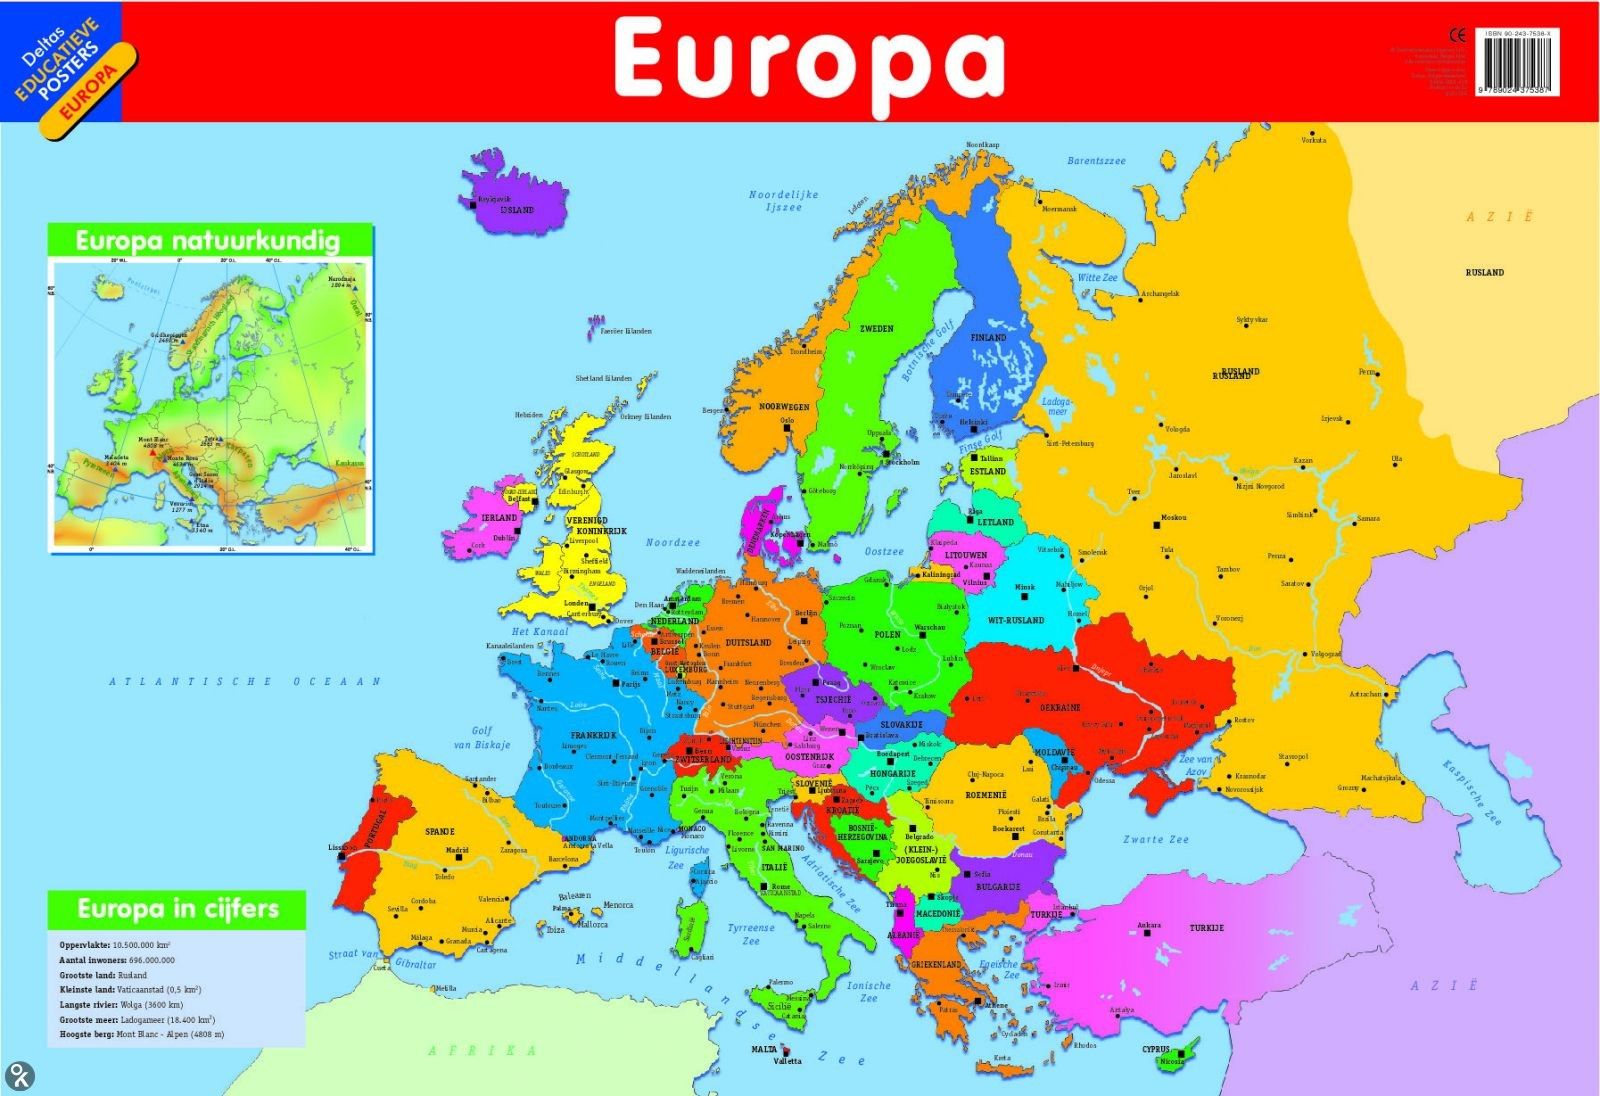 10 curiozitati despre Europa